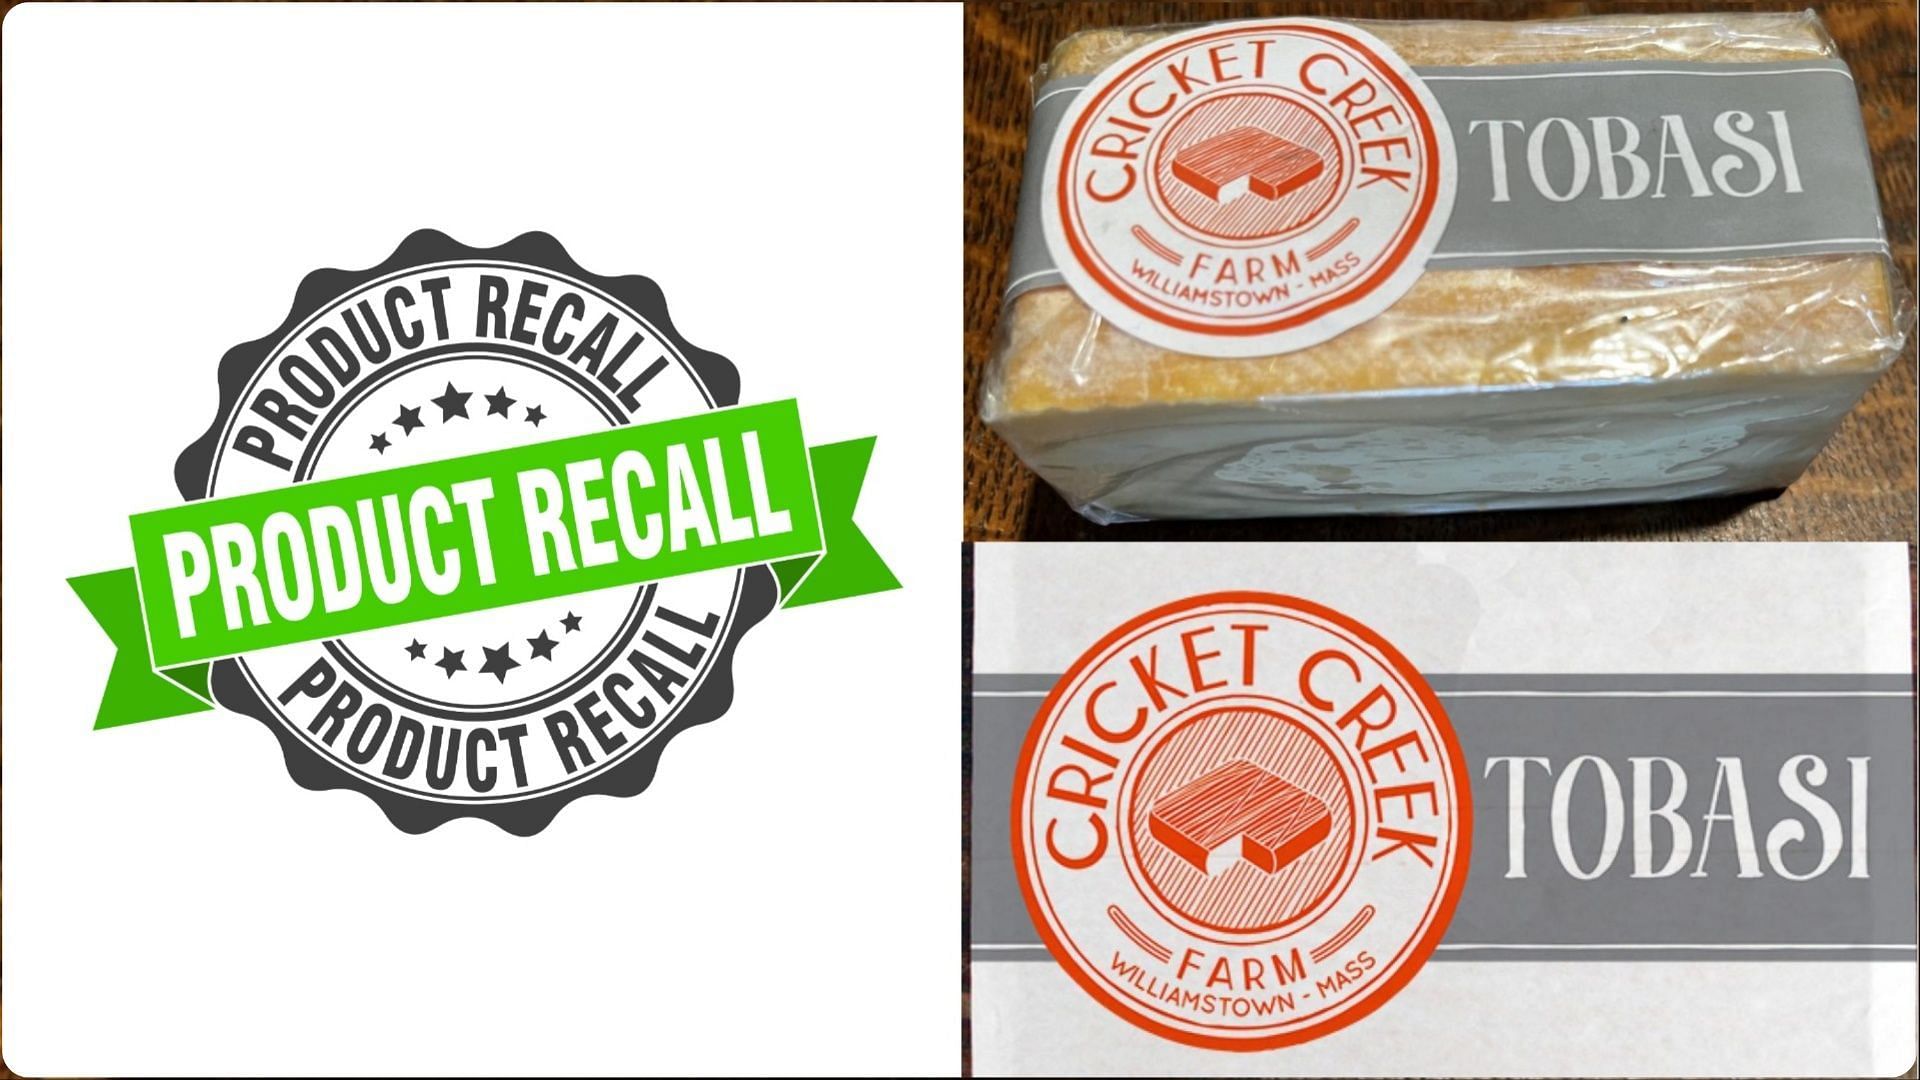 Cricket Creek Farm recalls Sophelise and Tobasi cheese over a potential Listeria monocytogenes contamination (Image via FDA)